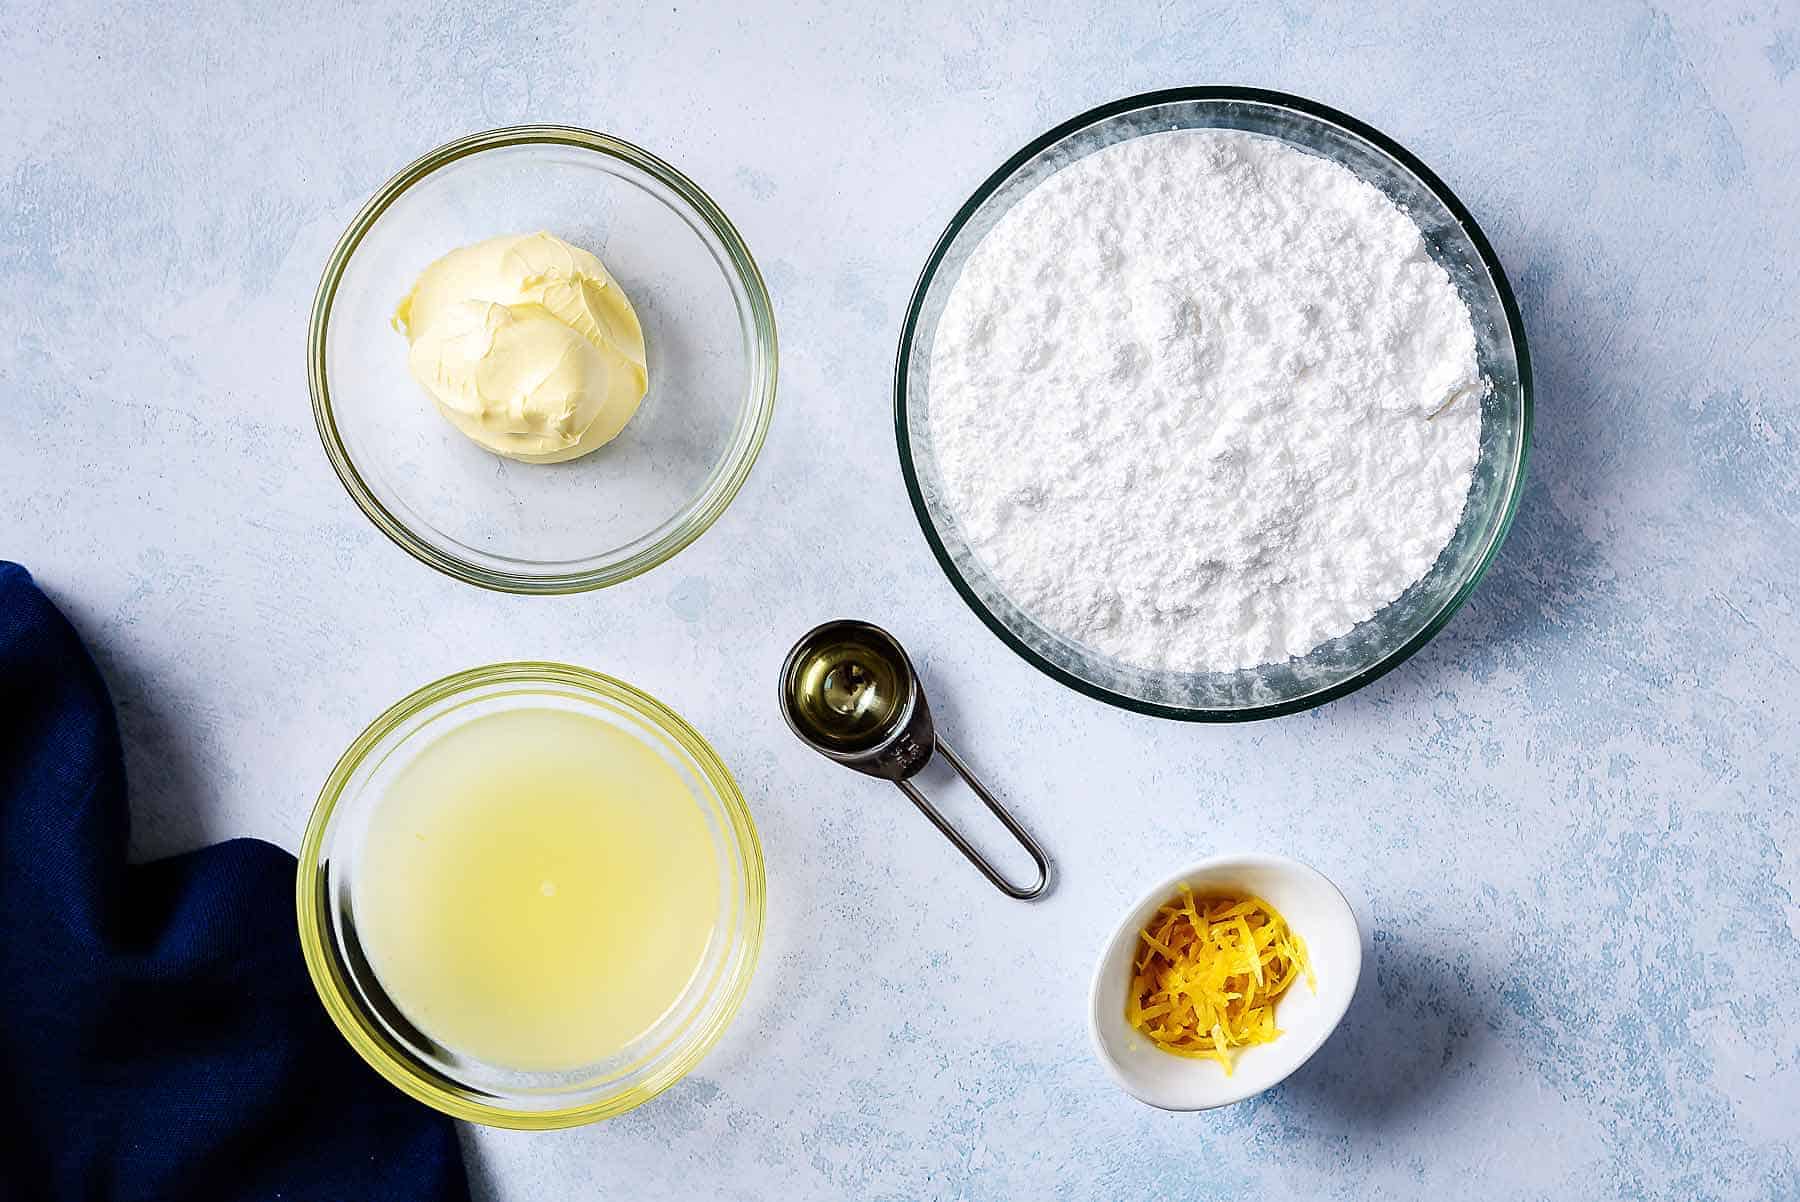 Ingredients for lemon icing